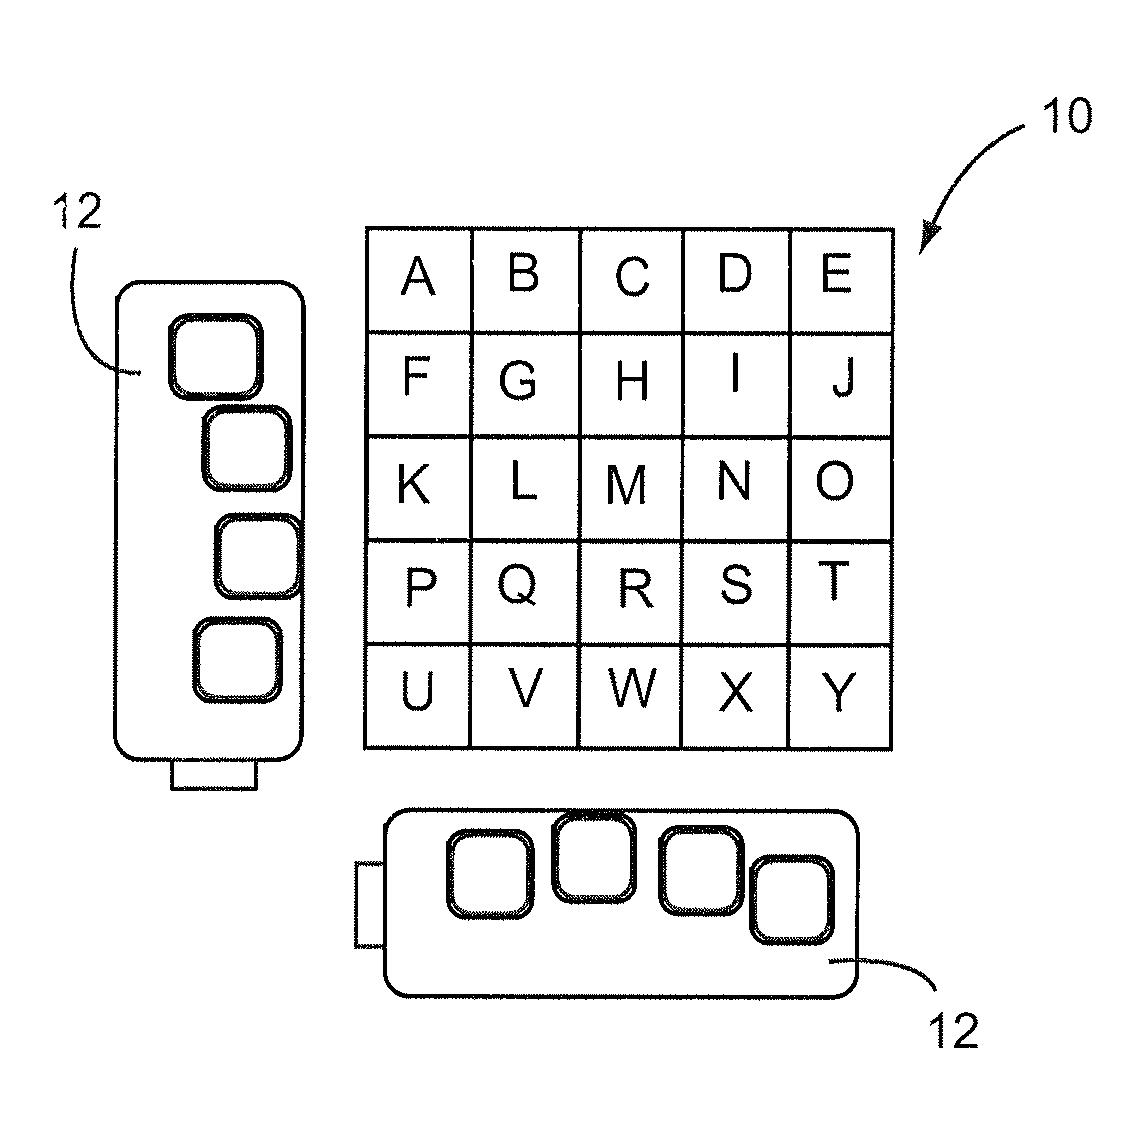 Matrix keyboarding system